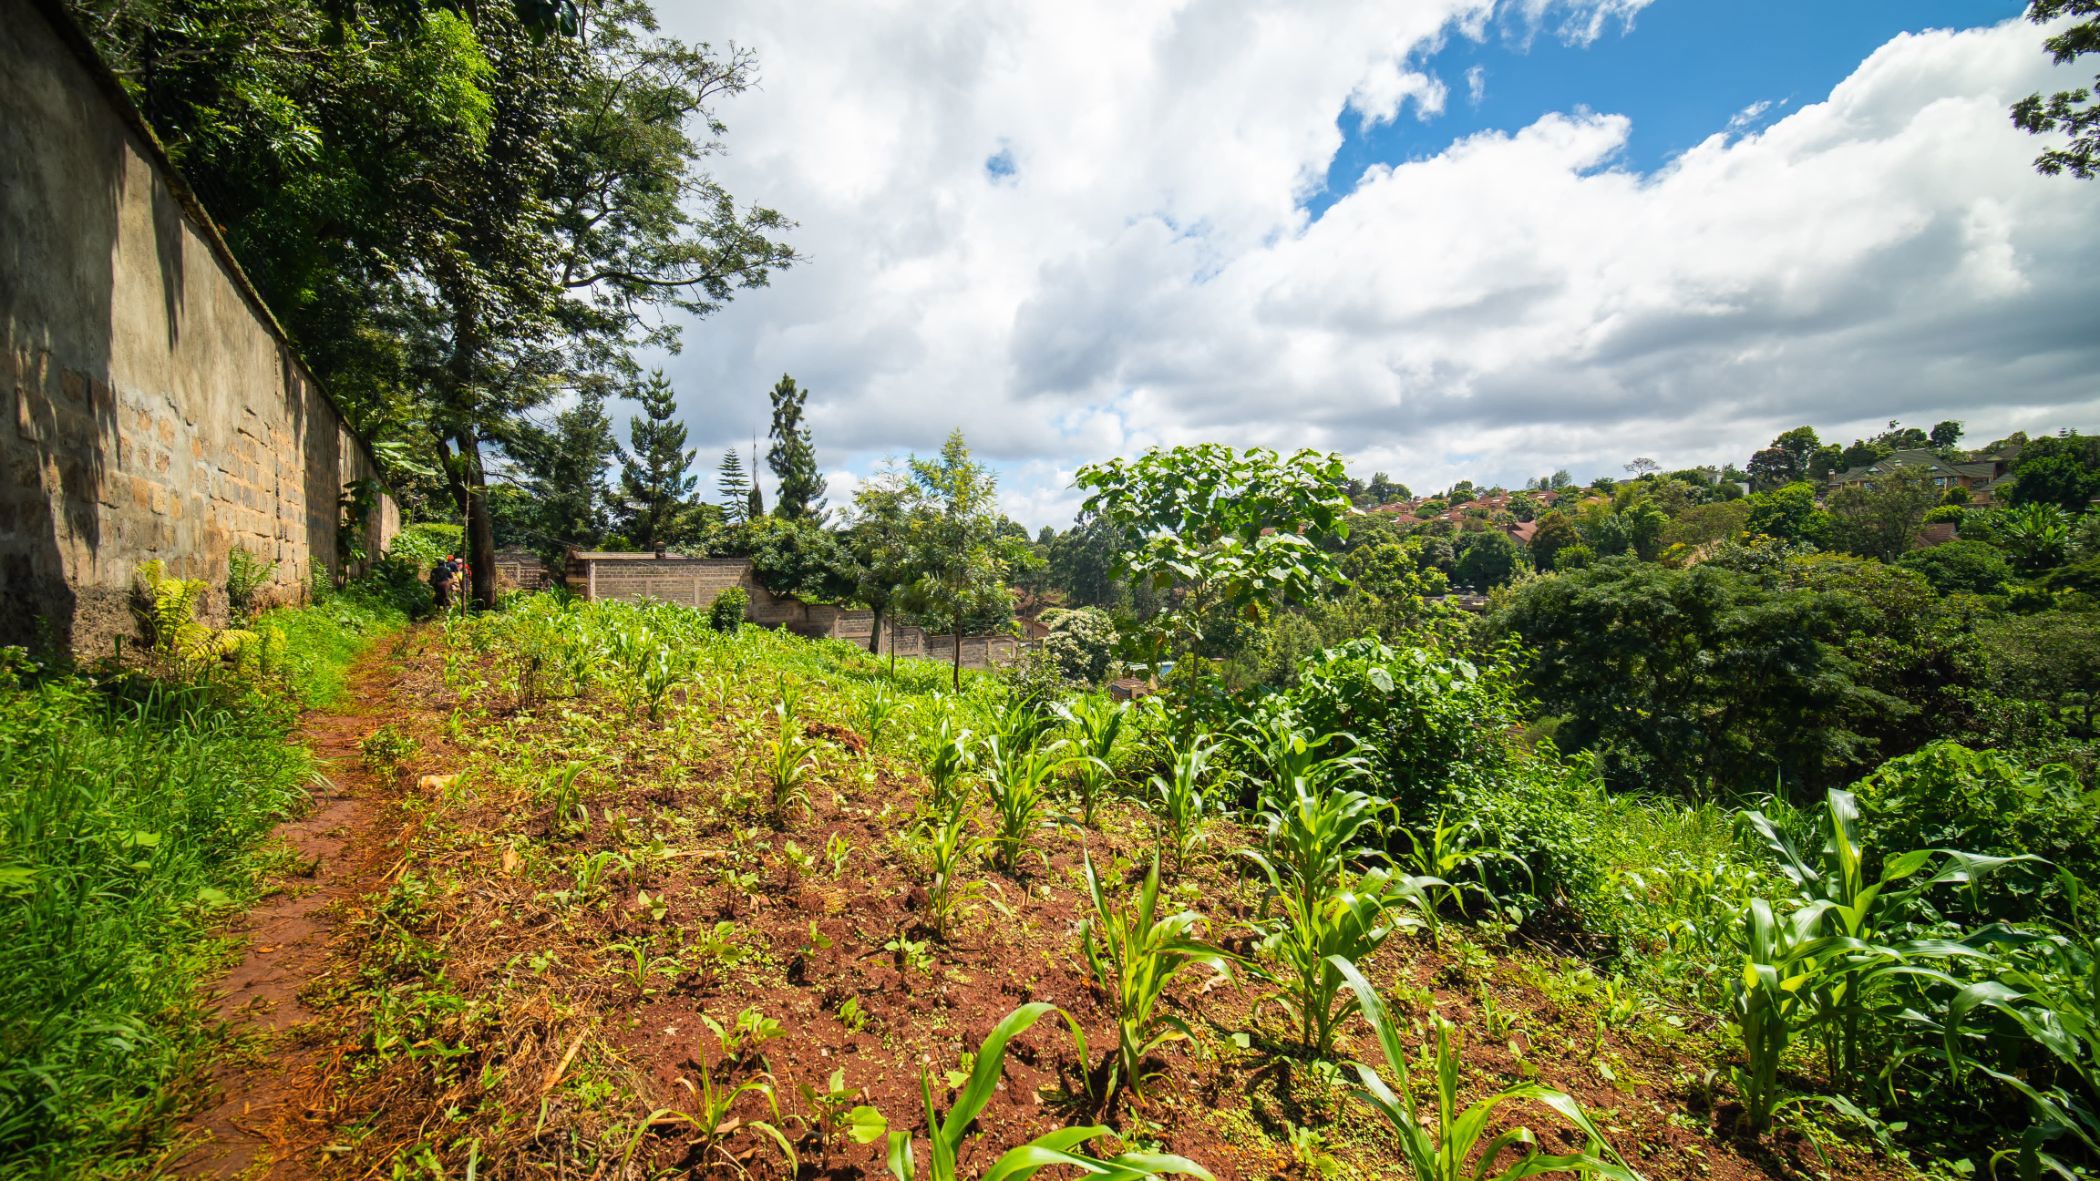 0.5 acres residential vacant land for sale in New Kitisuru (Kenya)